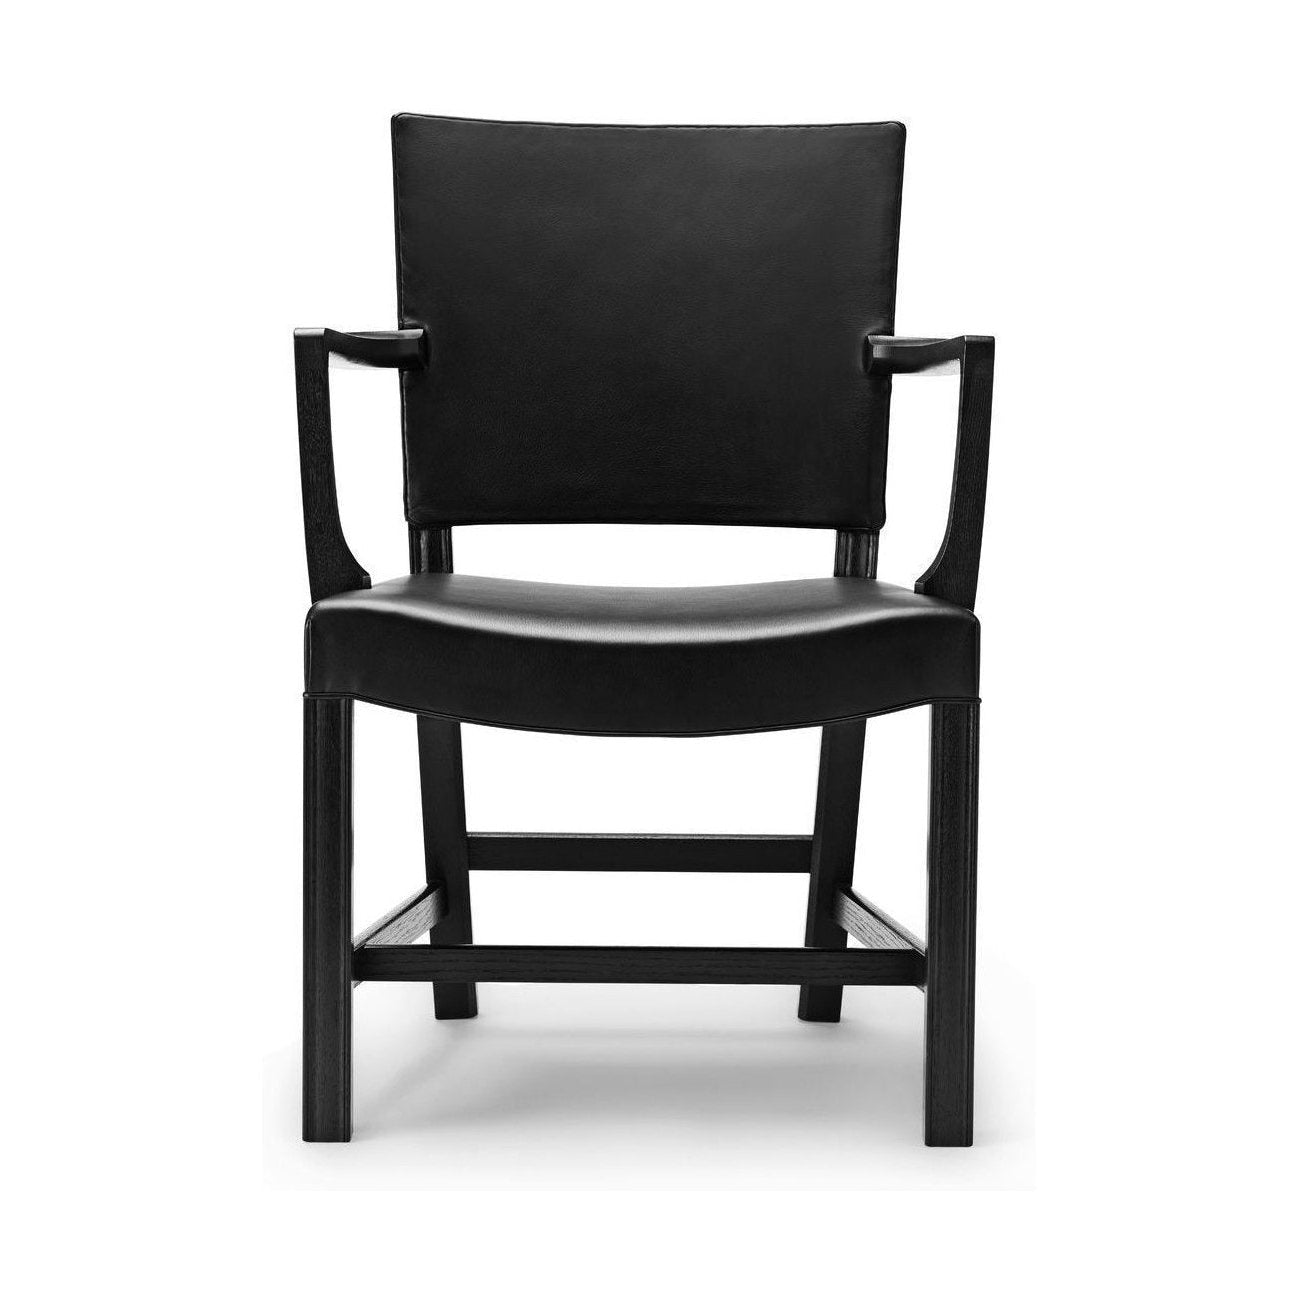 Carl Hansen KK37581 Grote rode fauteuil, zwart eiken/zwart leer